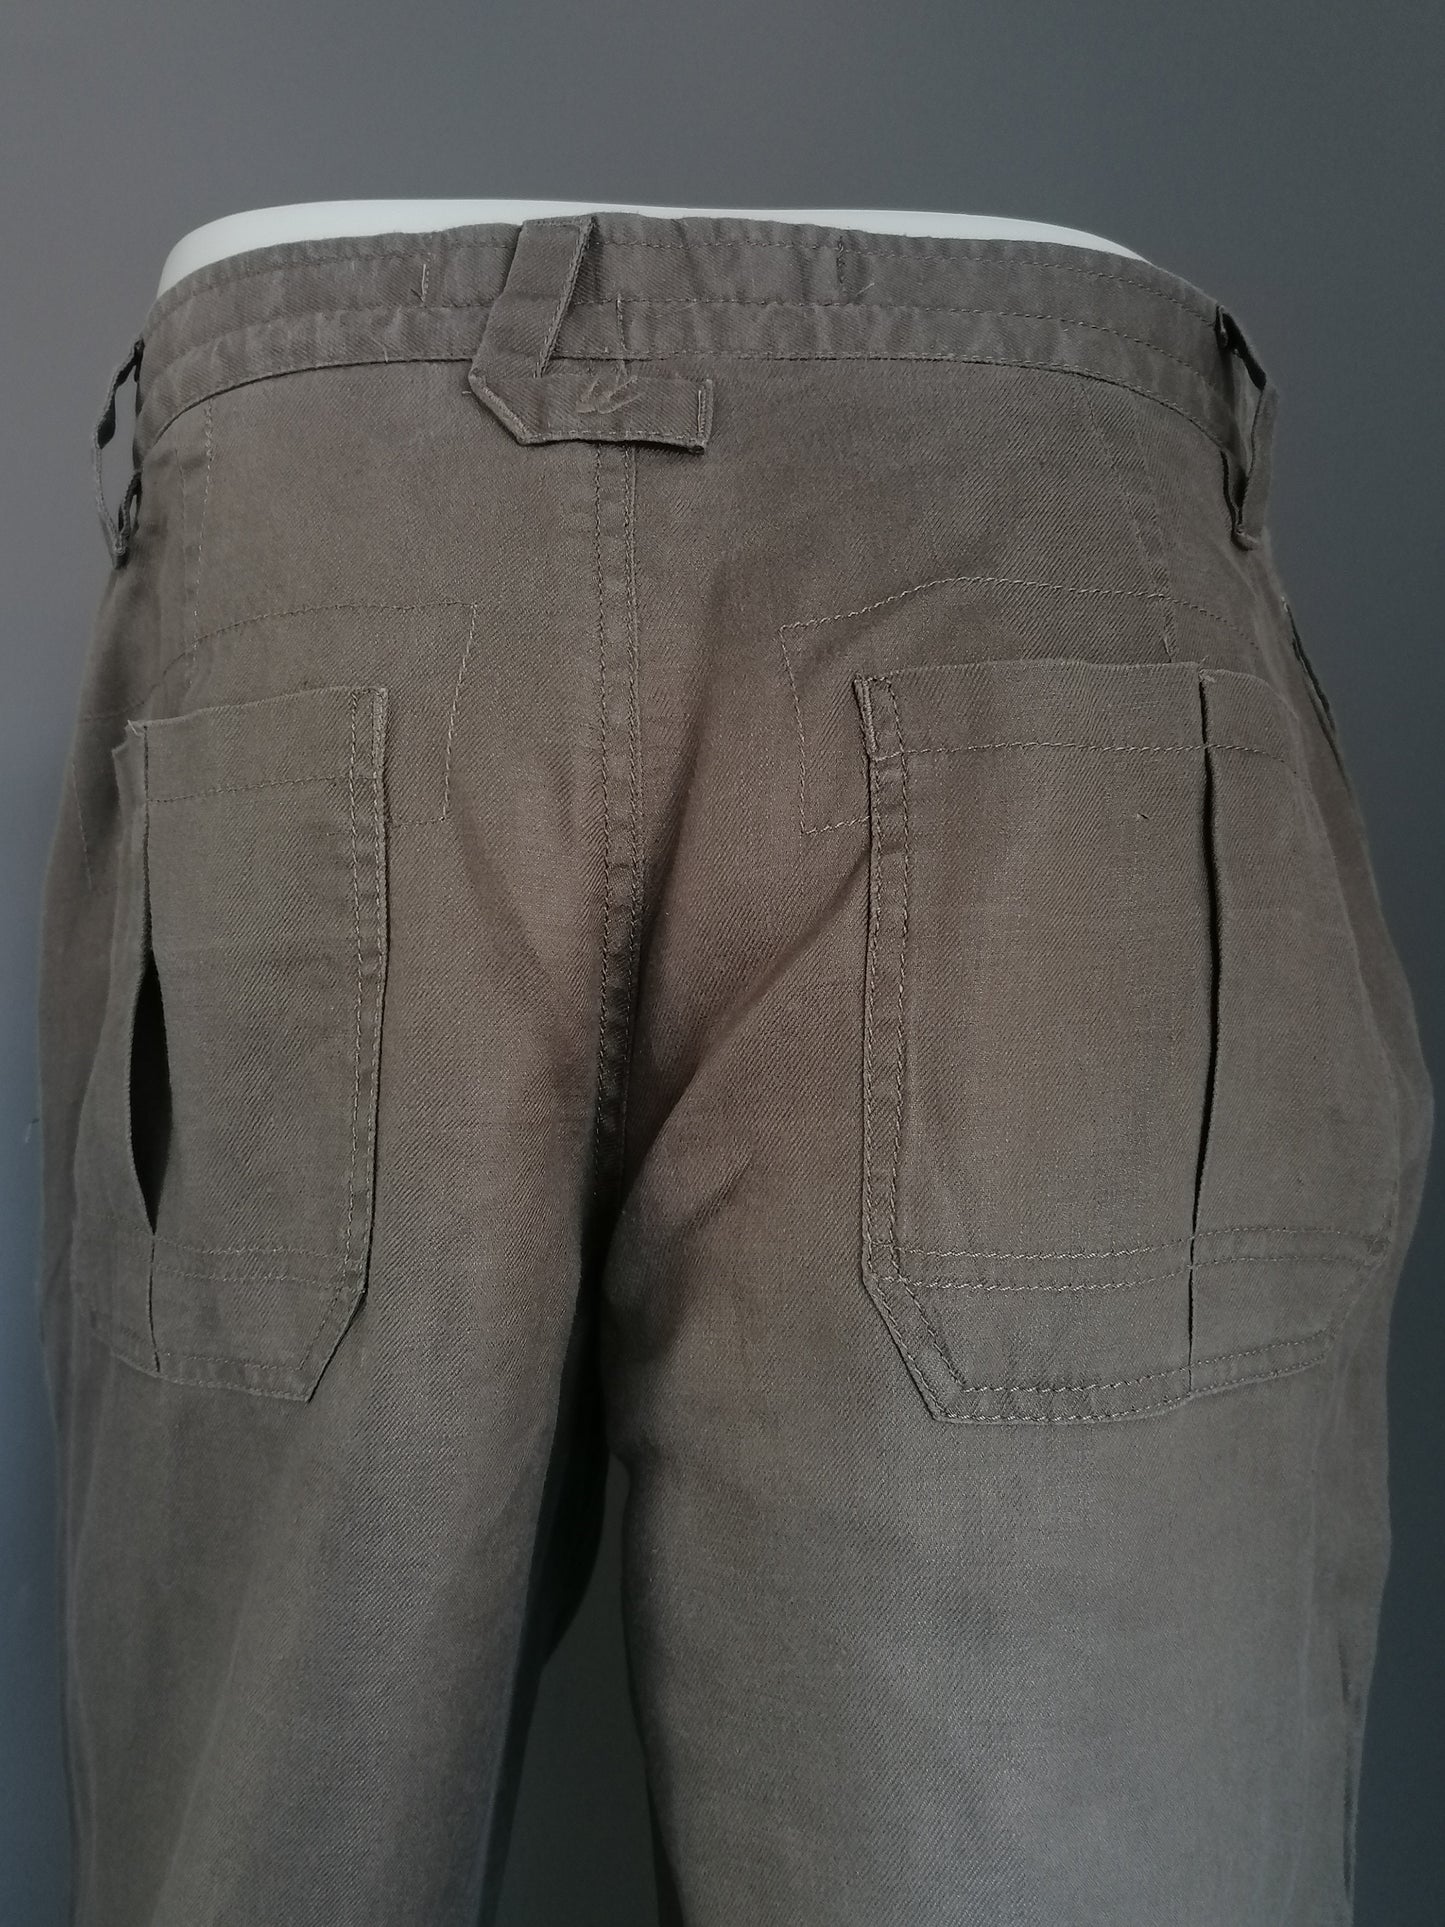 RJR Rocha John Rocha Linen Pants. Kaki / brown colored. Size W32 - L30 –  EcoGents